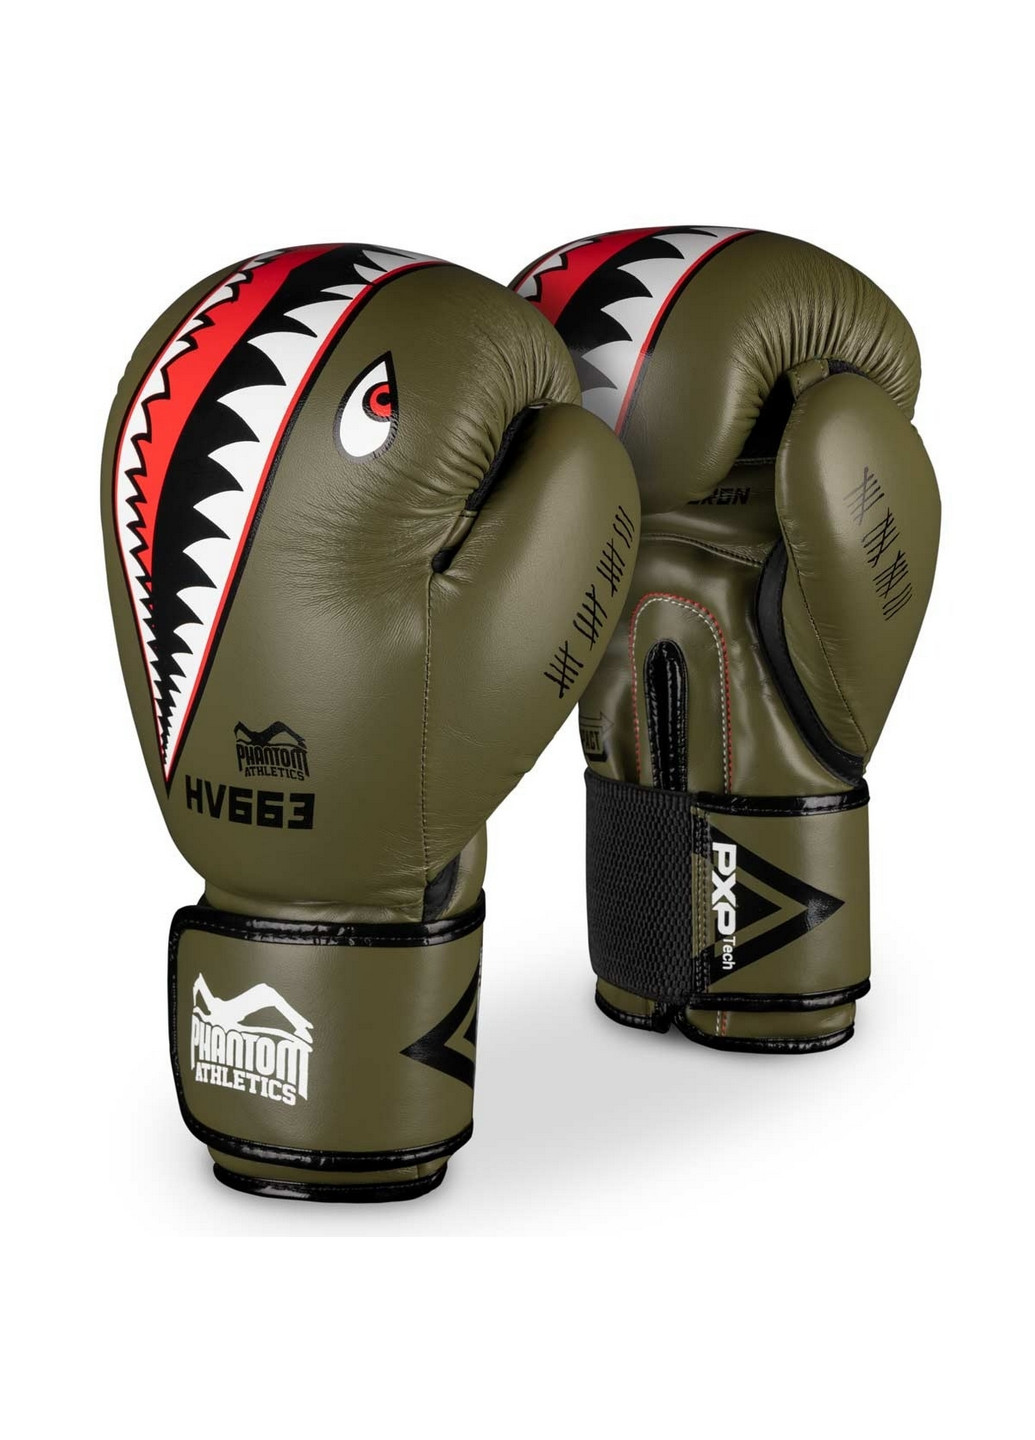 Боксерські рукавиці Fight Squad Army Phantom (276983208)